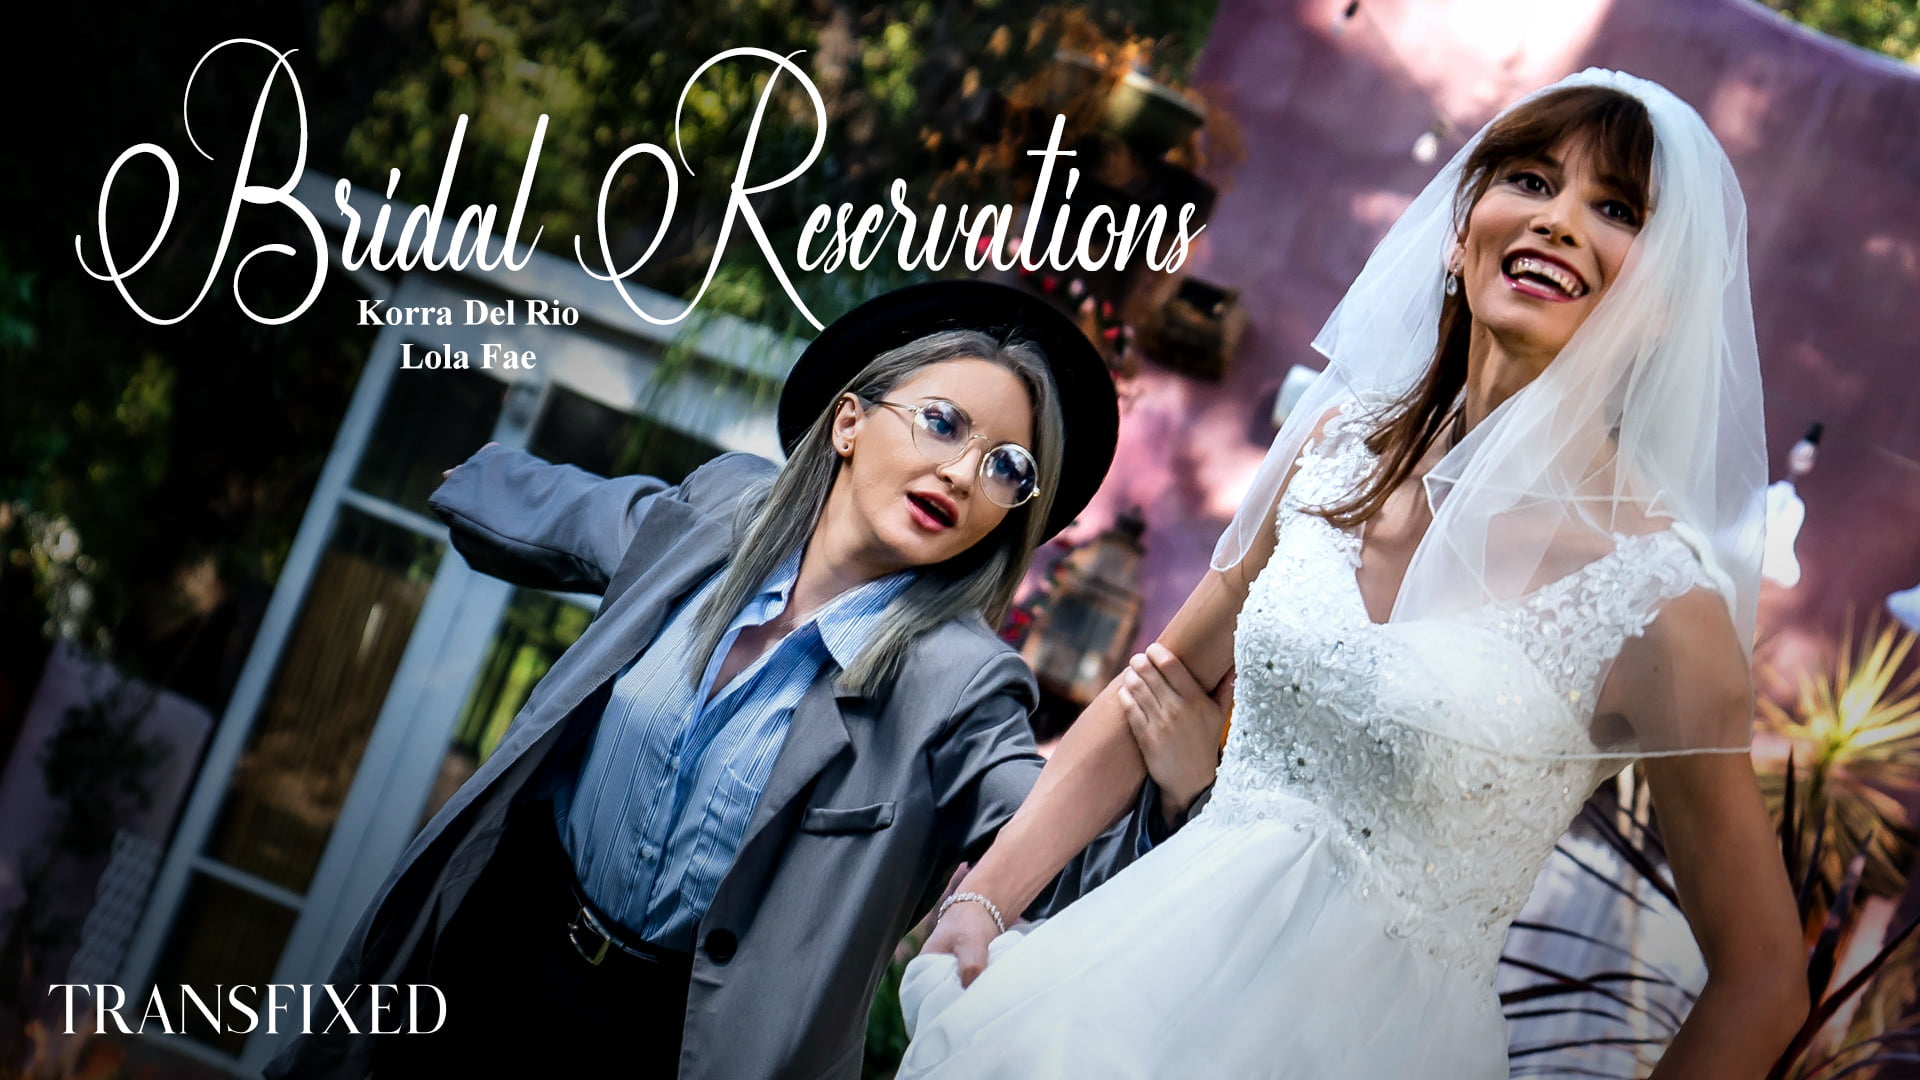 TransFixed &#8211; Korra del Rio And Lola Fae &#8211; Bridal Reservations